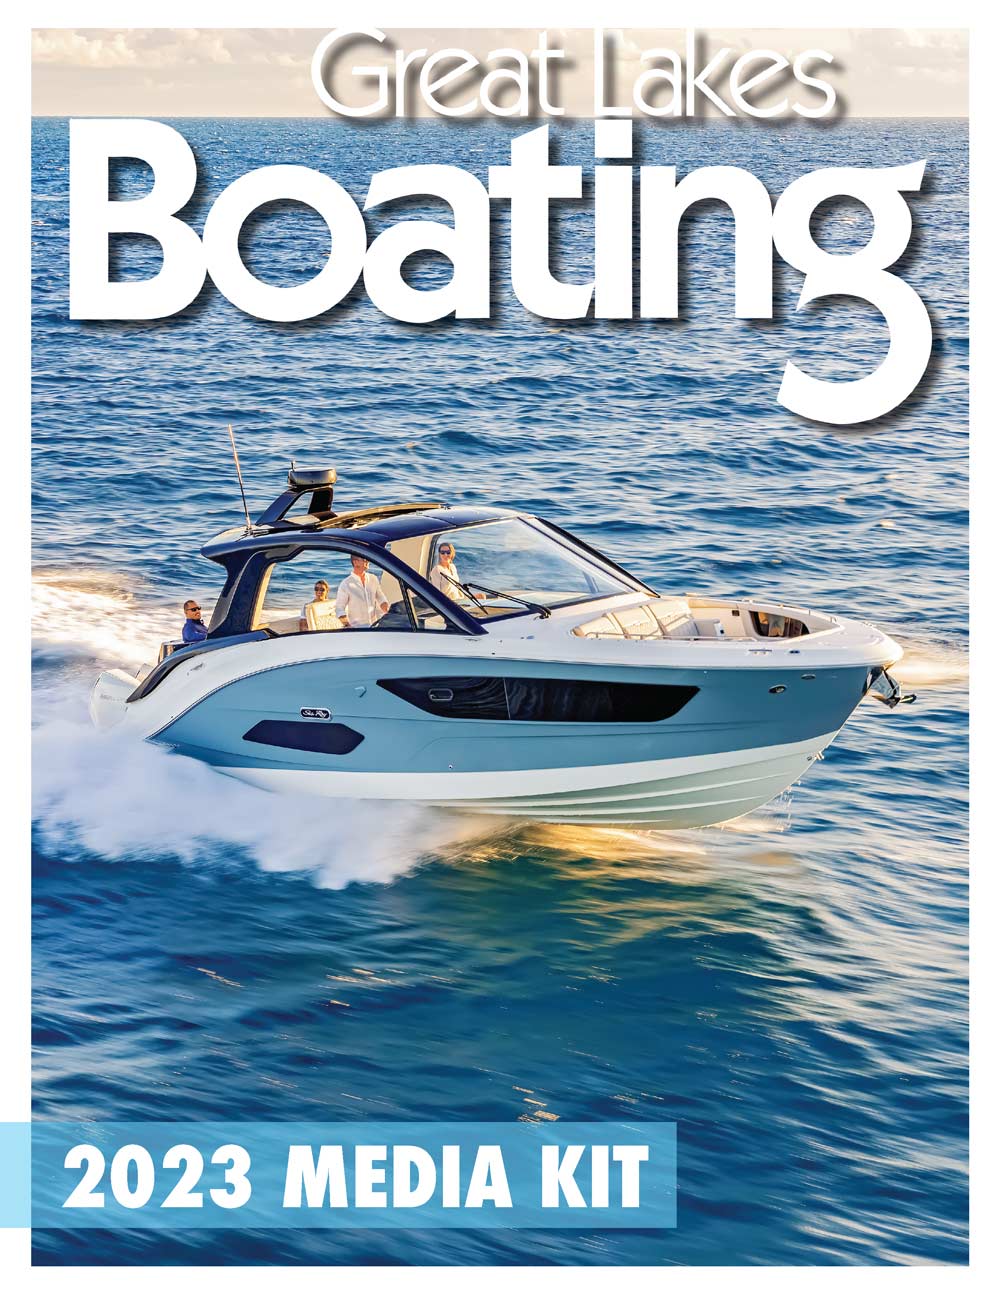 Great Lakes Boating 2023 Media Kit cover